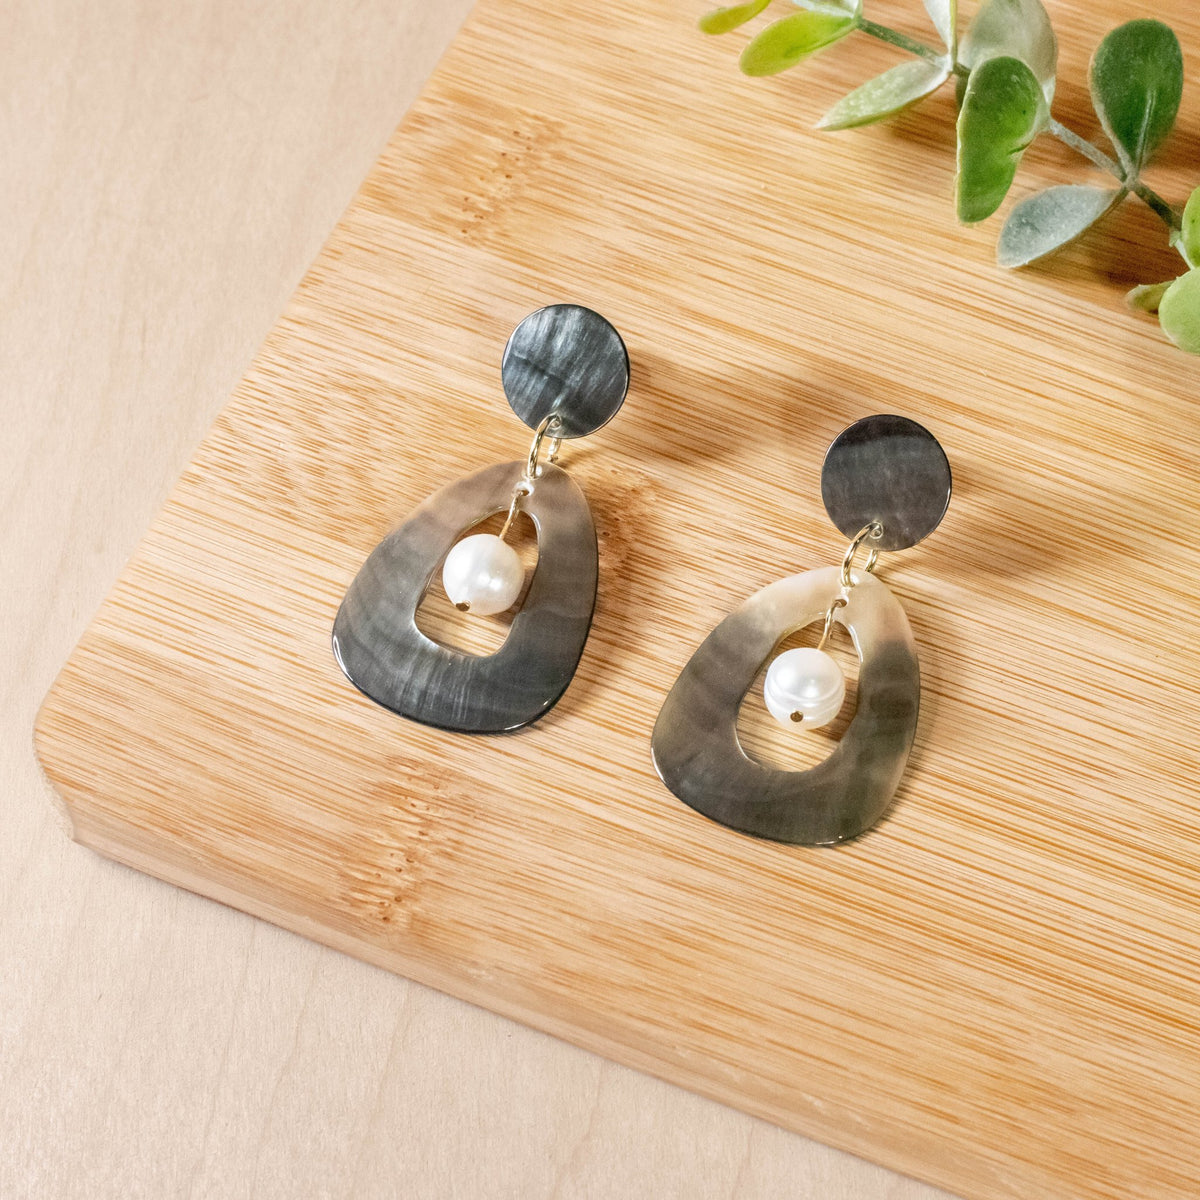 Earrings, Jewelry - Hollow Mother of Pearl Earrings with Inner Pearl - Black | LIKHÂ - LIKHÂ